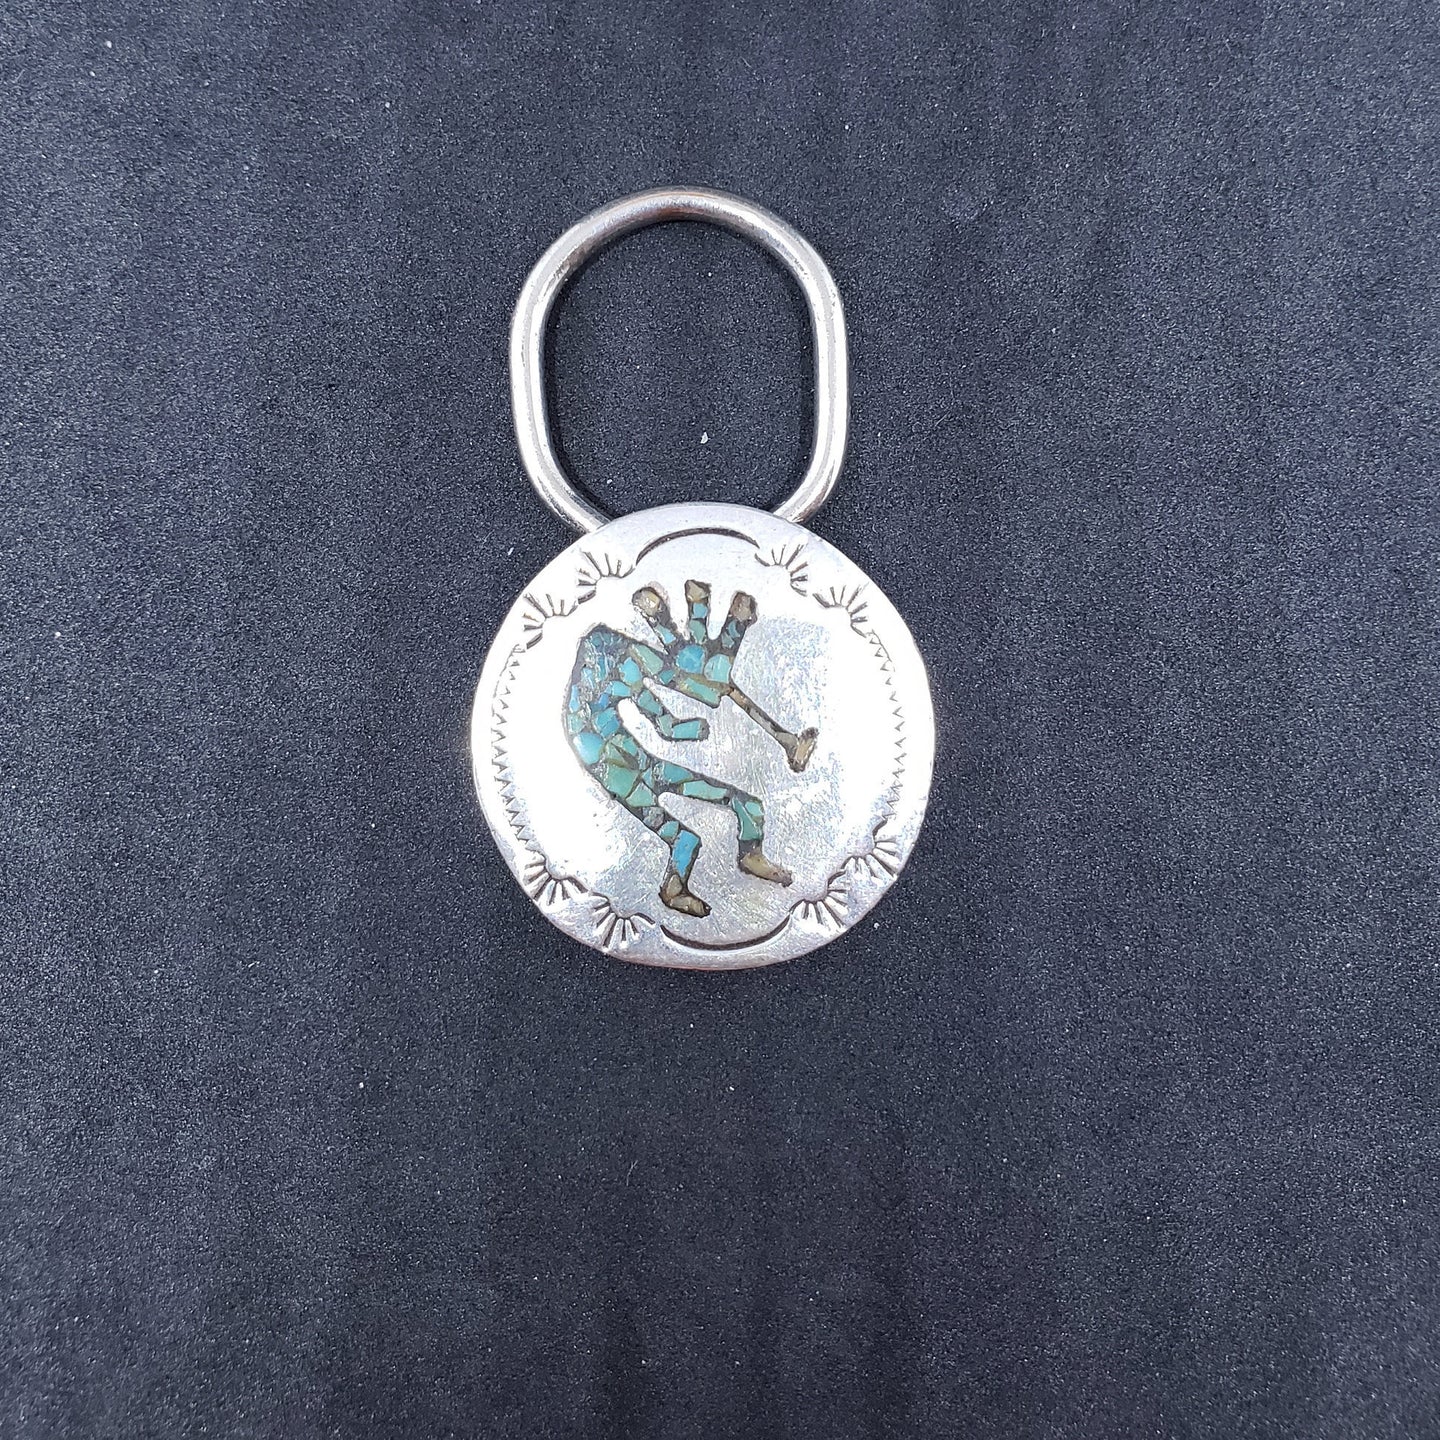 Vintage Zuni Kachina inlay turquoise chip sterling silver keychain key holder